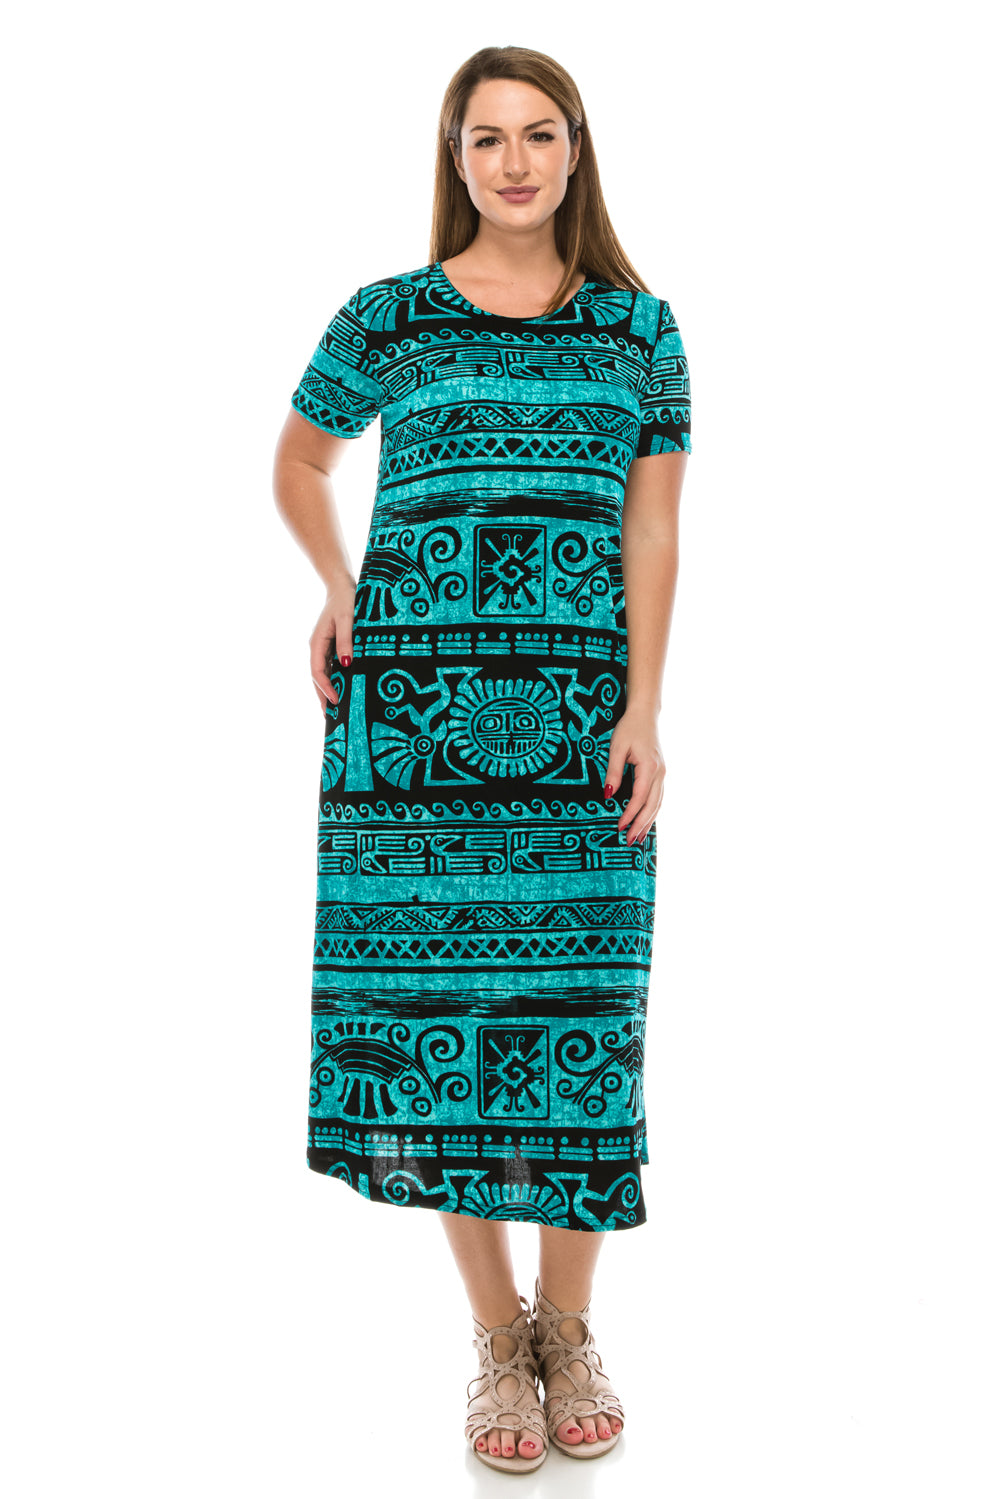 Jostar Women's Stretchy Long Dress Short Sleeve Print, 702BN-SP-W901 - Jostar Online